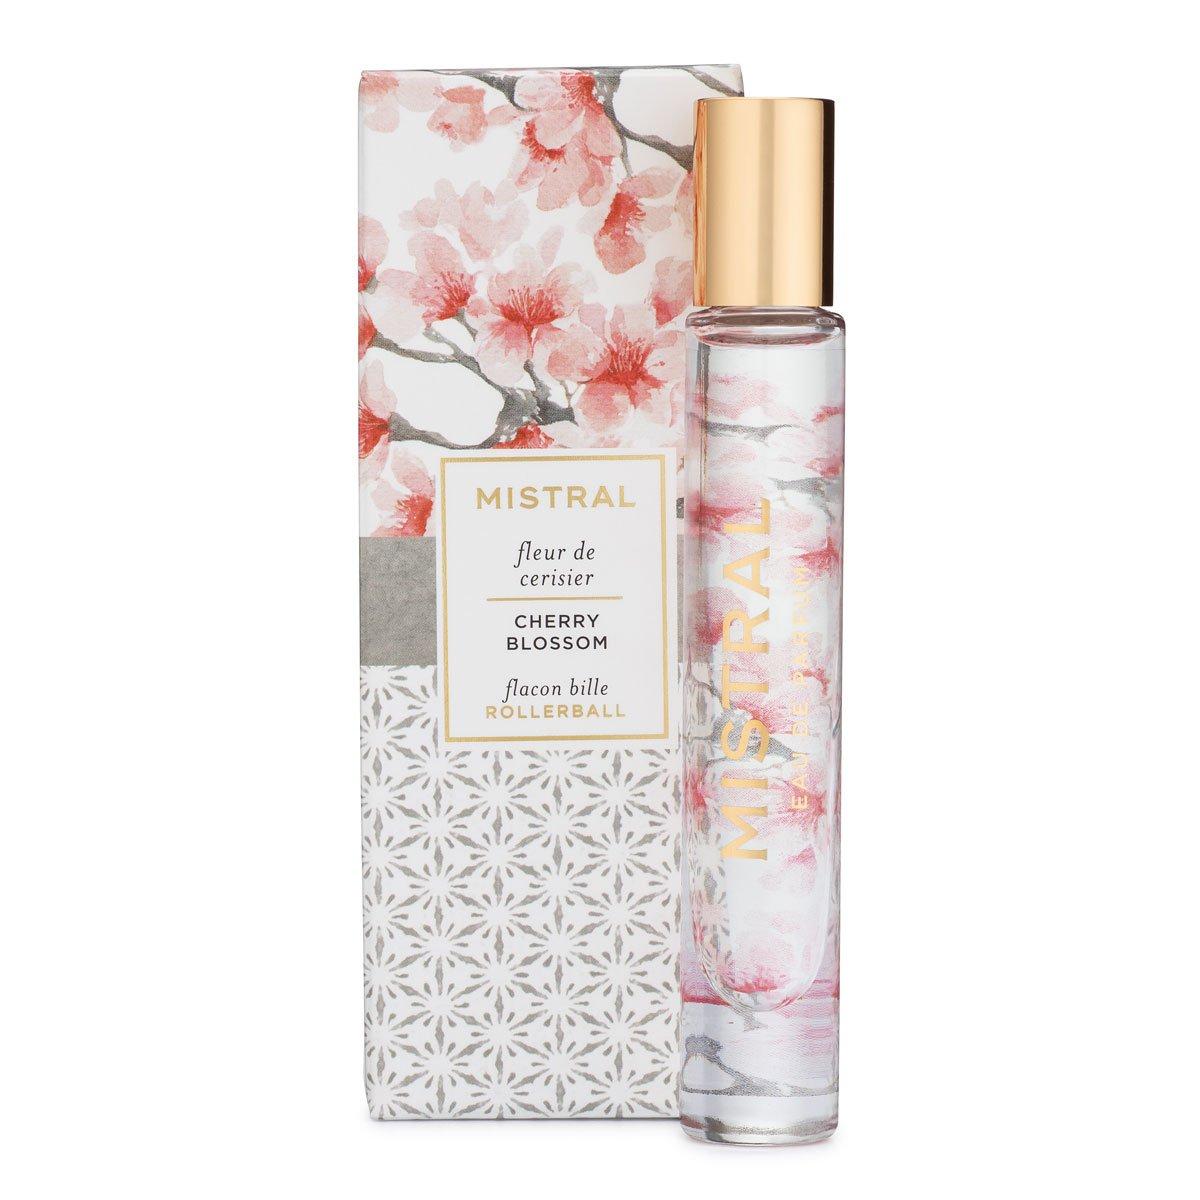 Primary image of Papiers Fantasie Cherry Blossom Roll On Eau De Parfum